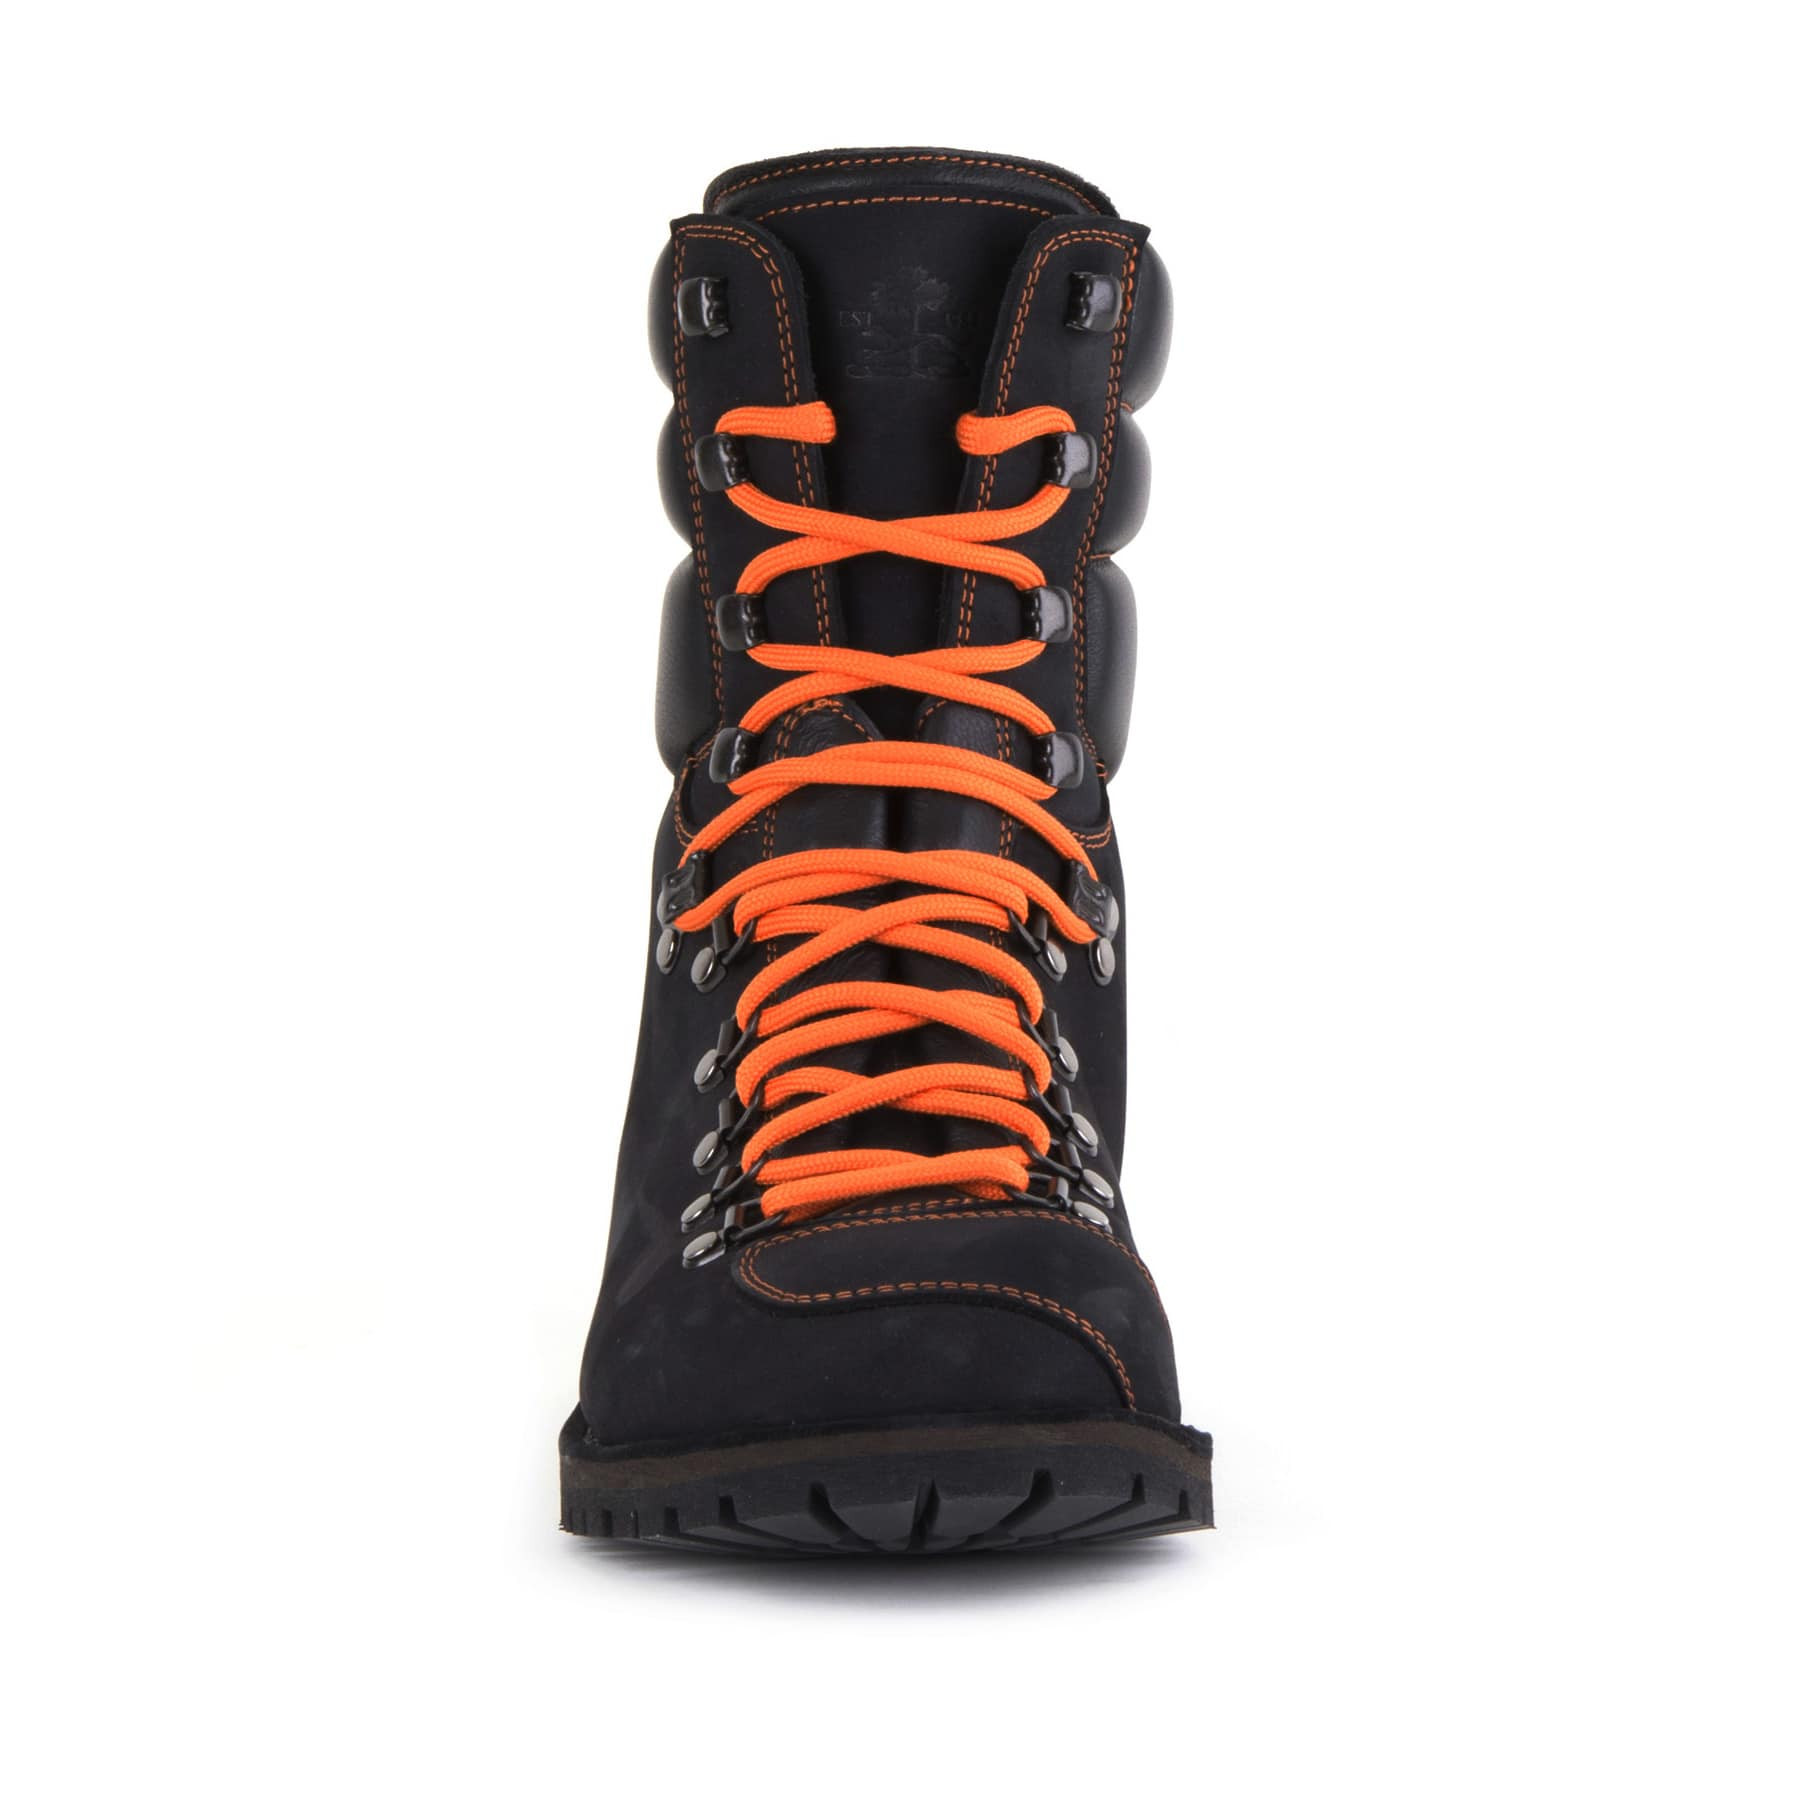 Biker Boot AdventureSE Denver Black, zwarte heren boot, oranje stiksel